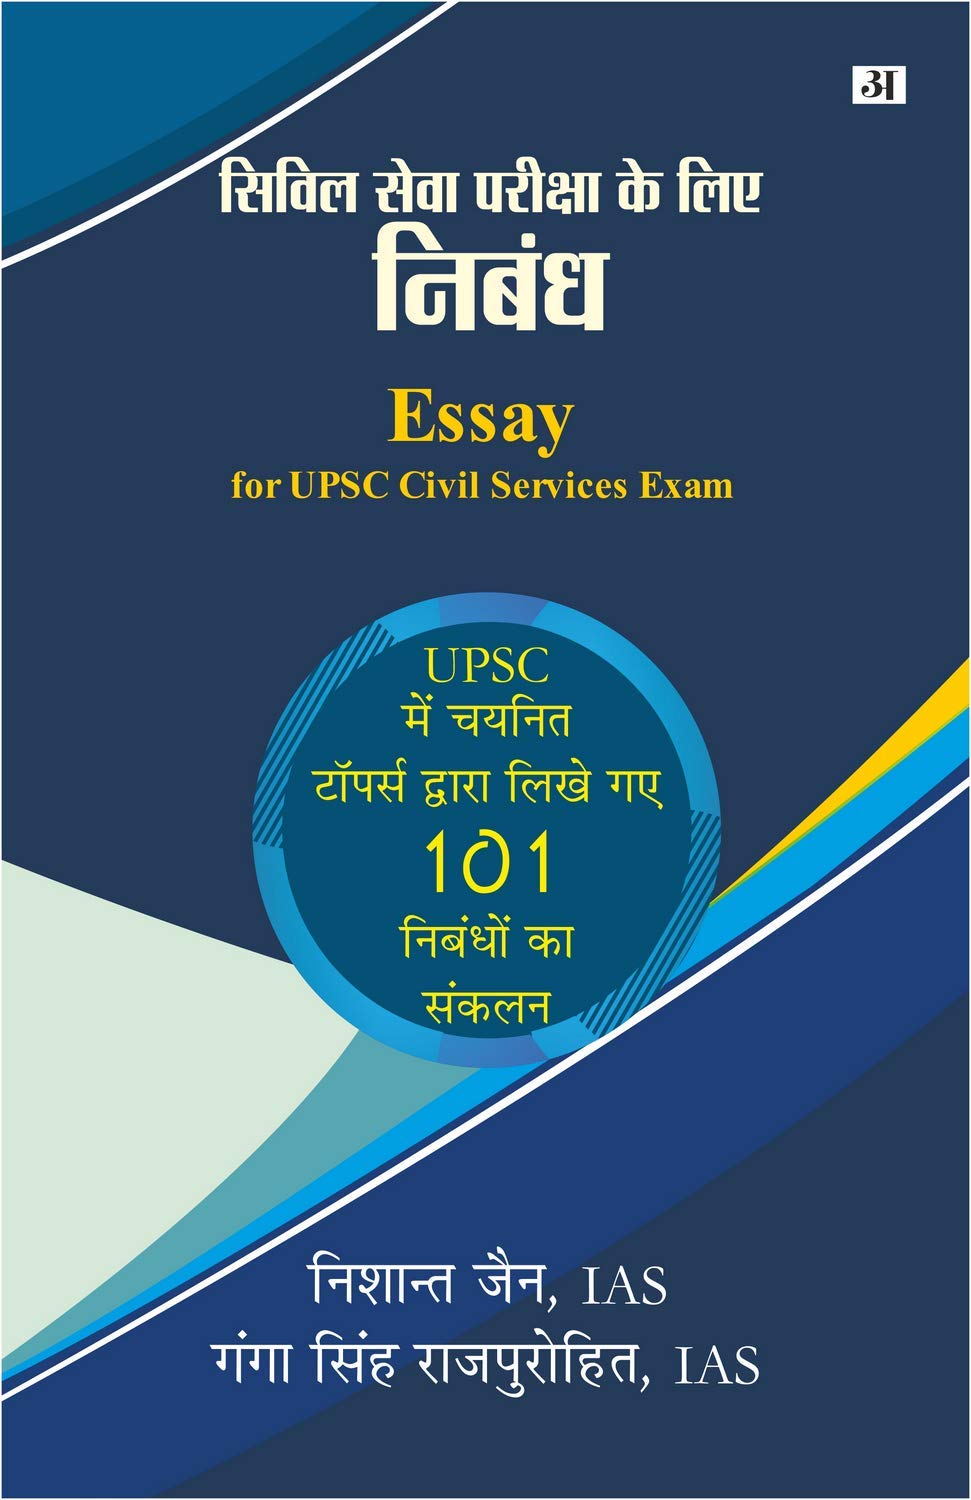 nishant jain essay book pdf in hindi